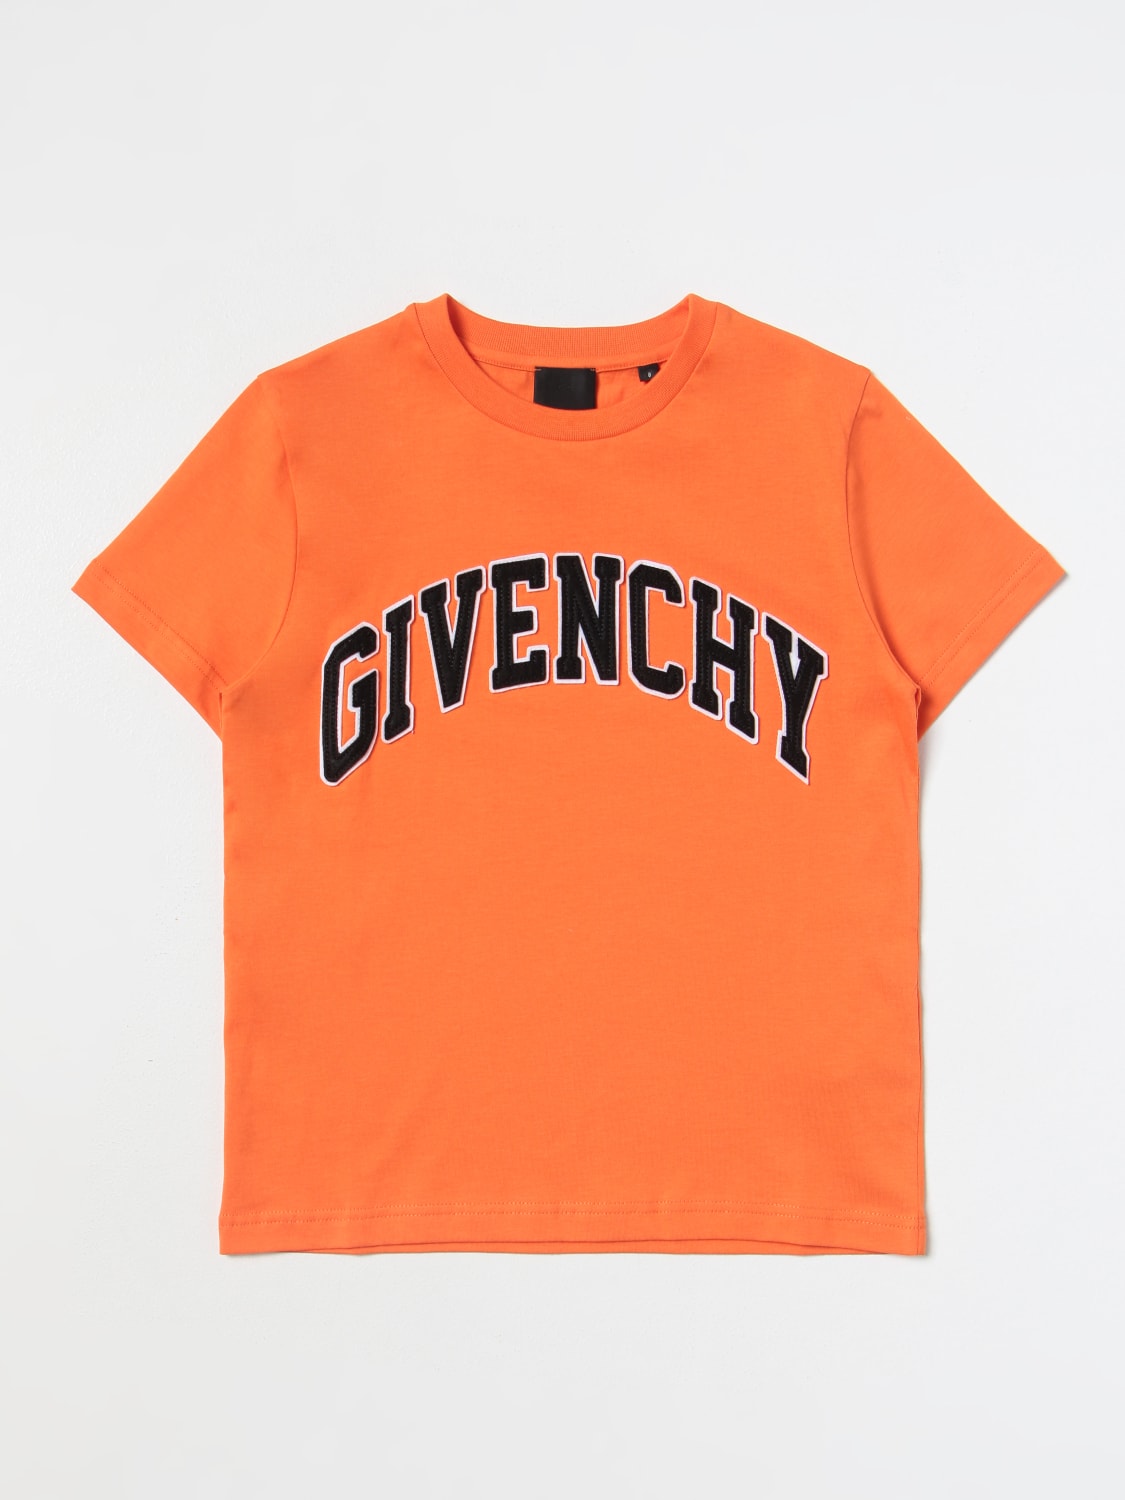 GIVENCHY t-shirt Orange for girls